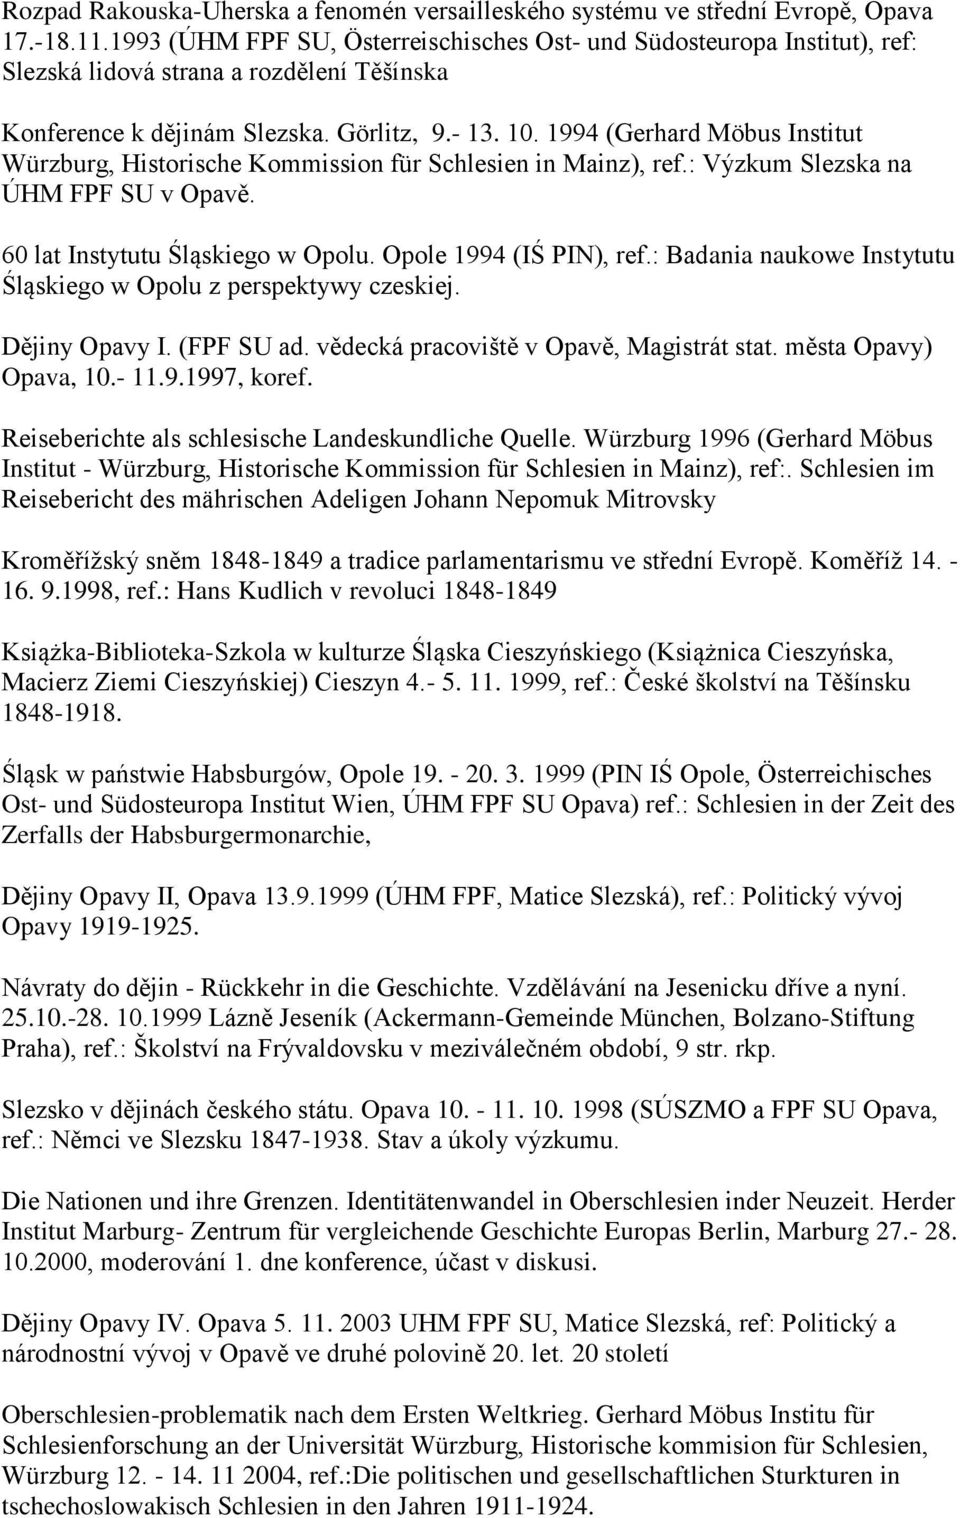 1994 (Gerhard Möbus Institut Würzburg, Historische Kommission für Schlesien in Mainz), ref.: Výzkum Slezska na ÚHM FPF SU v Opavě. 60 lat Instytutu Śląskiego w Opolu. Opole 1994 (IŚ PIN), ref.